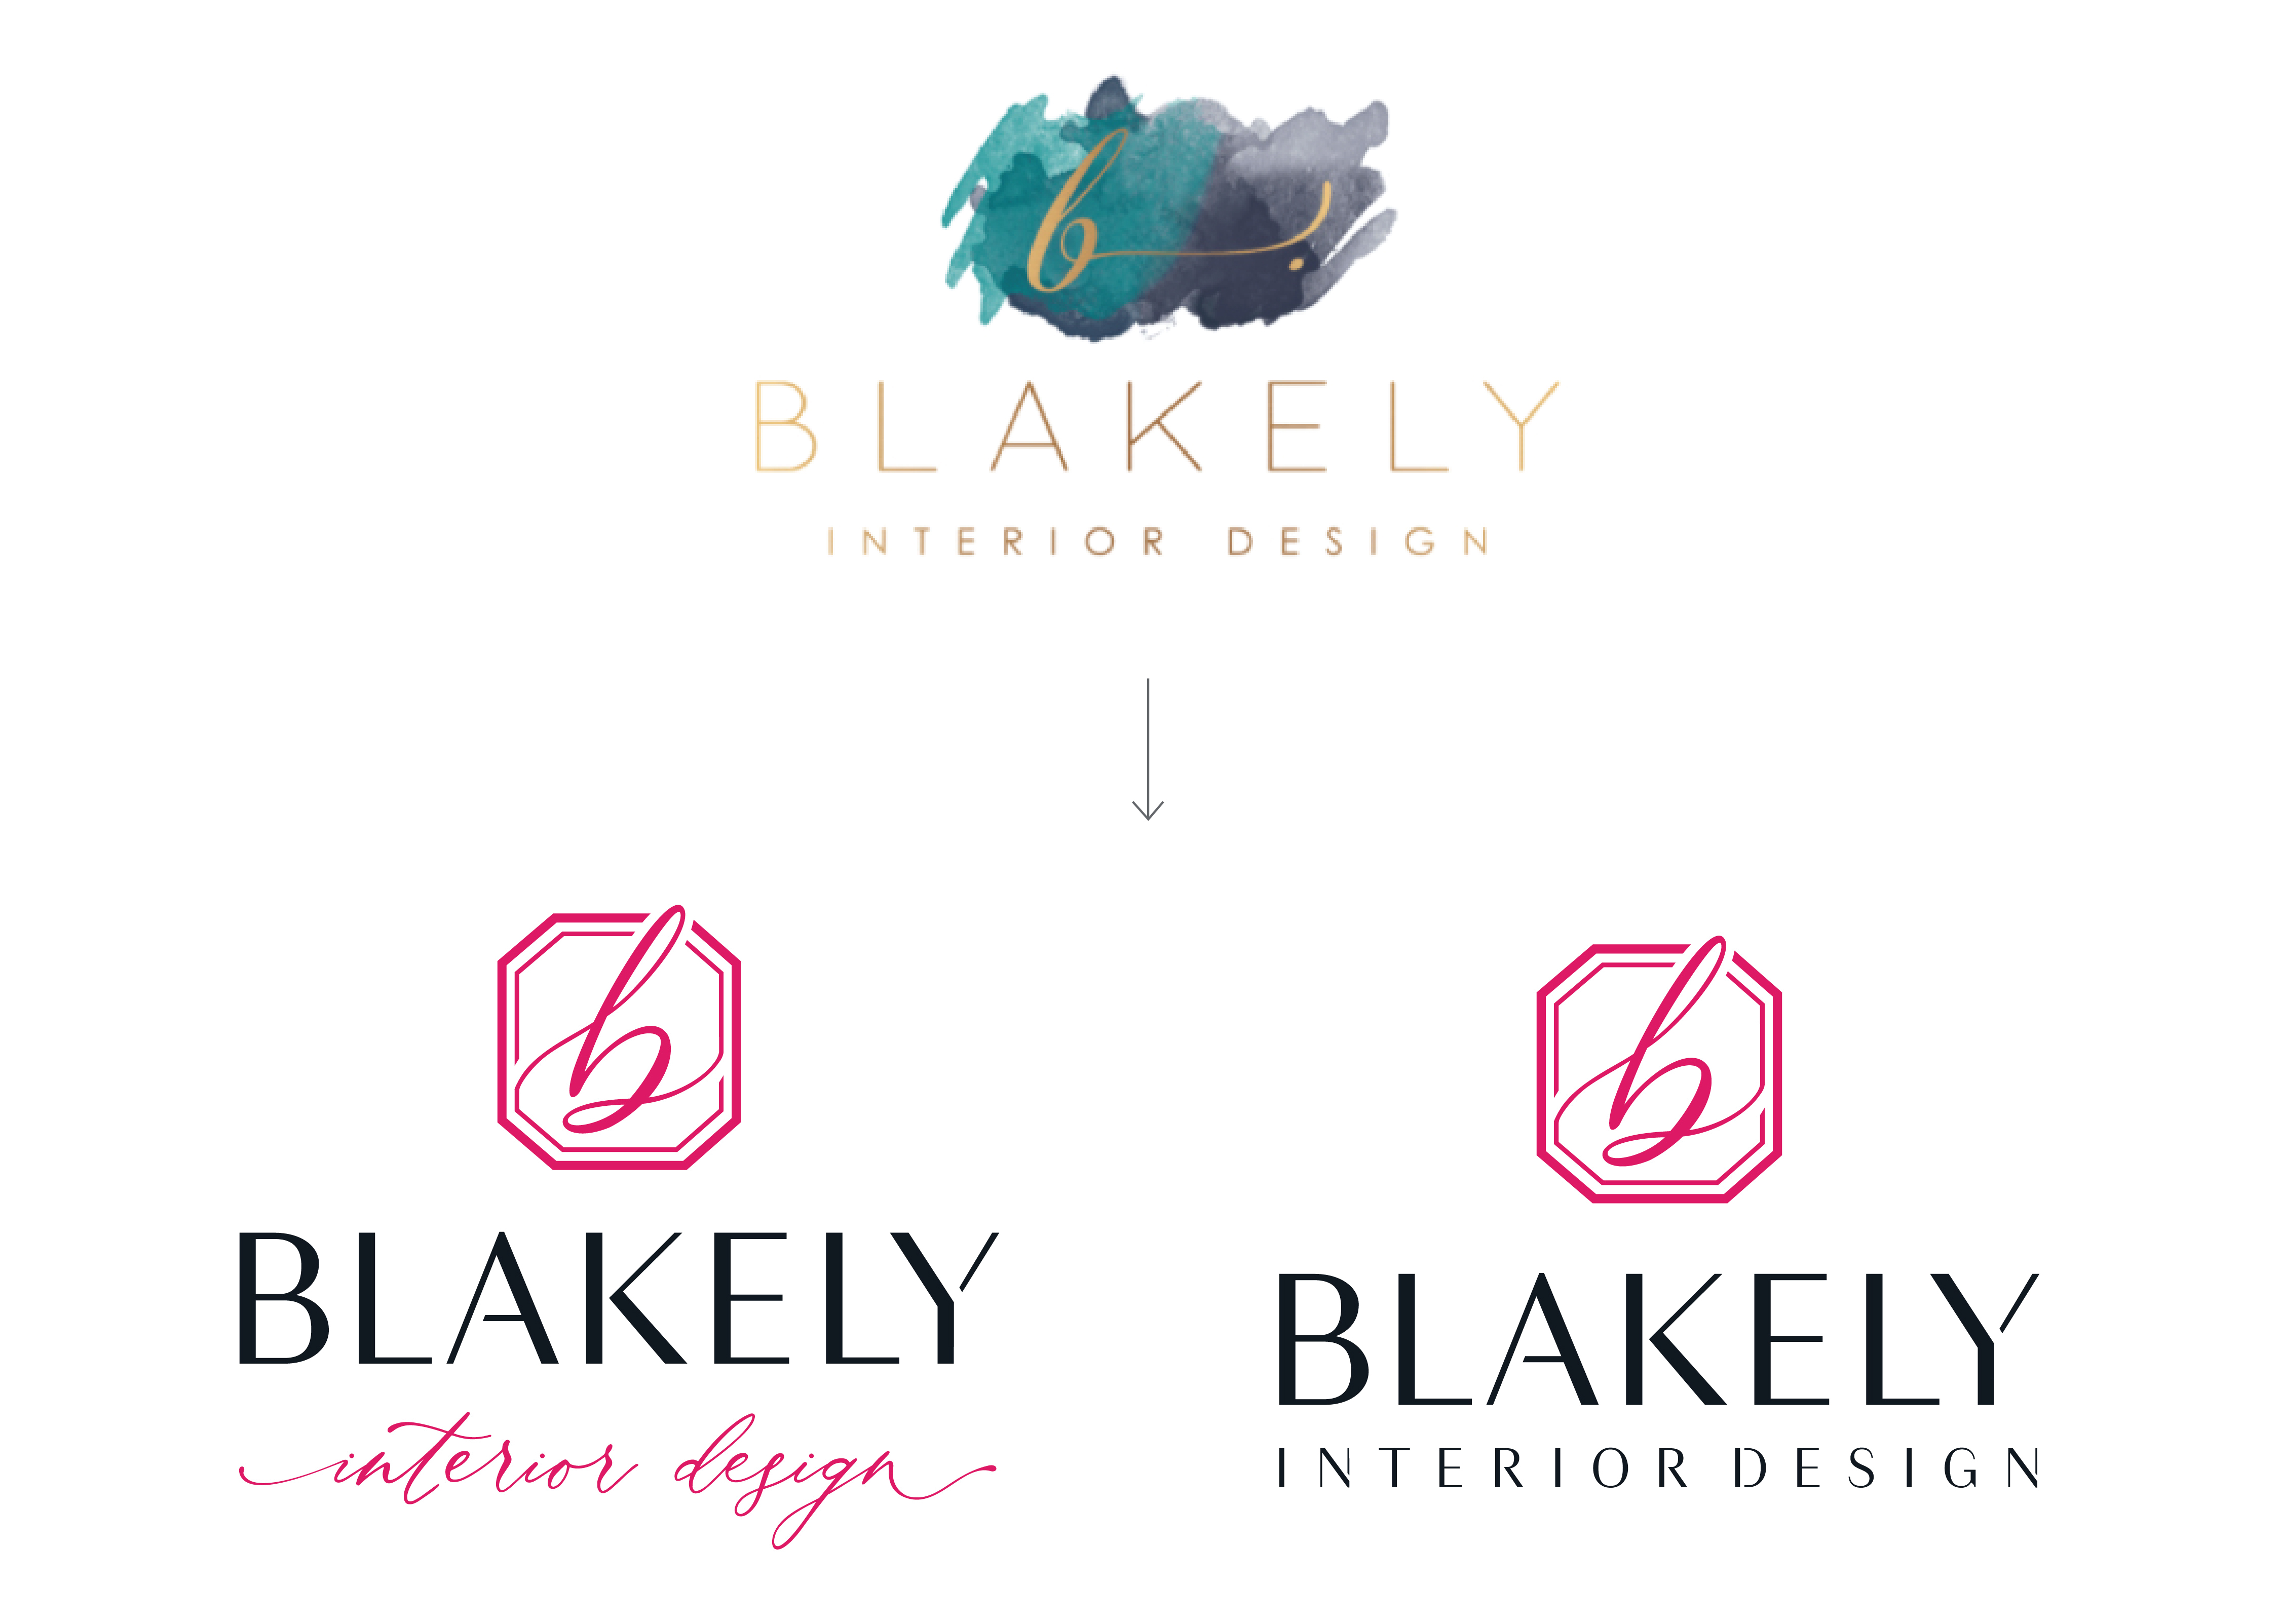 Blakely Interior Design old logo vs new, by Pop & Grey